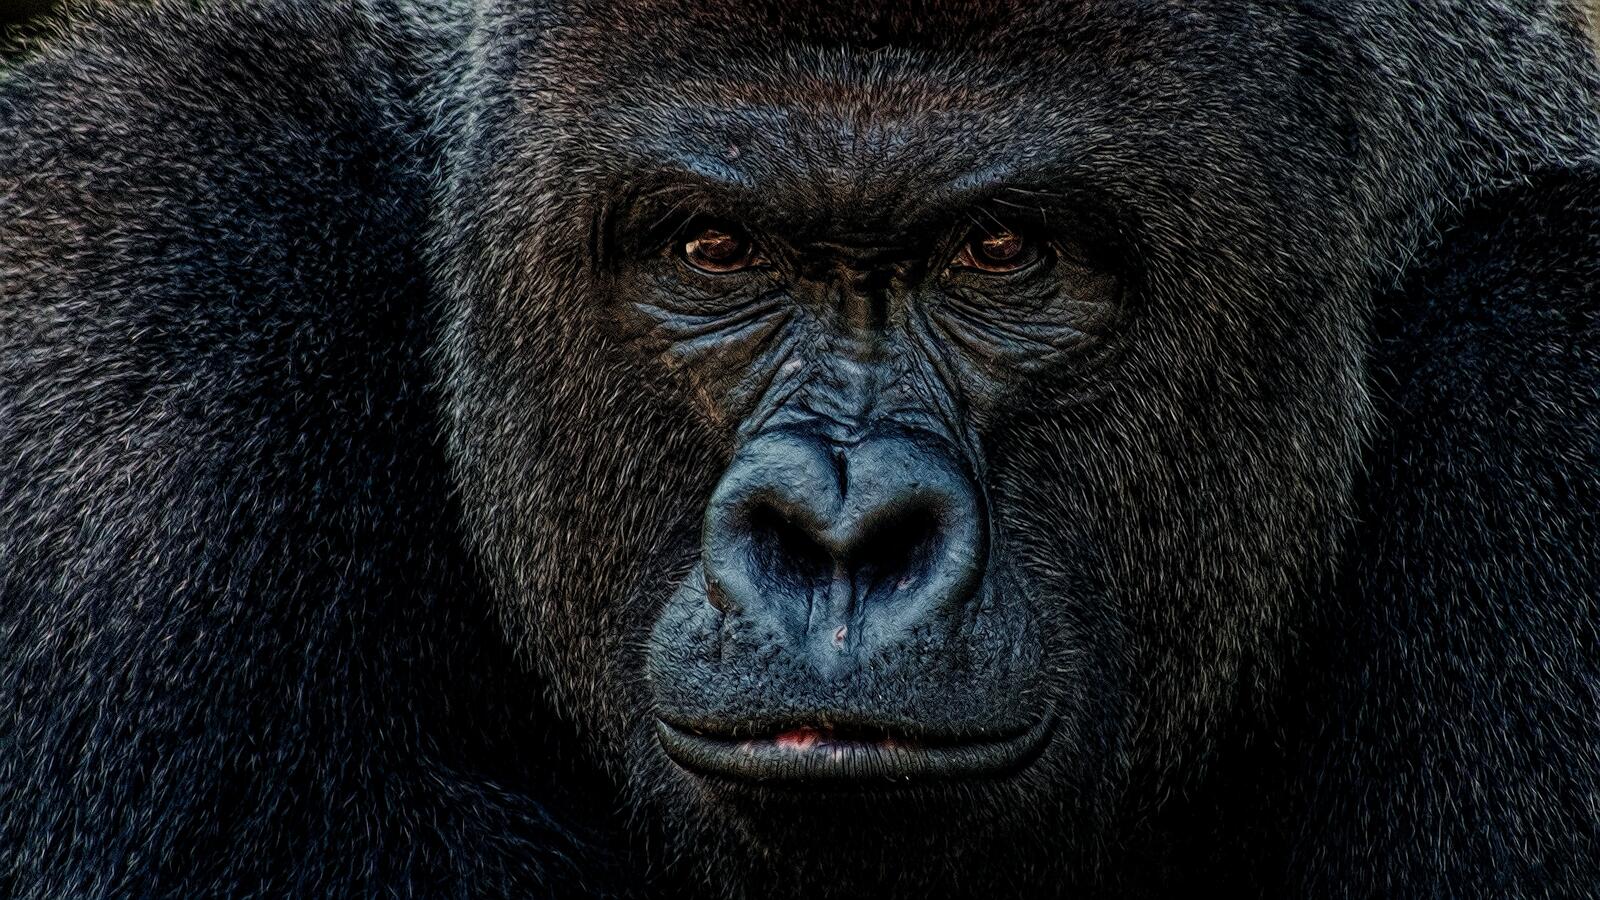 Wallpapers gorilla threatening look primates on the desktop